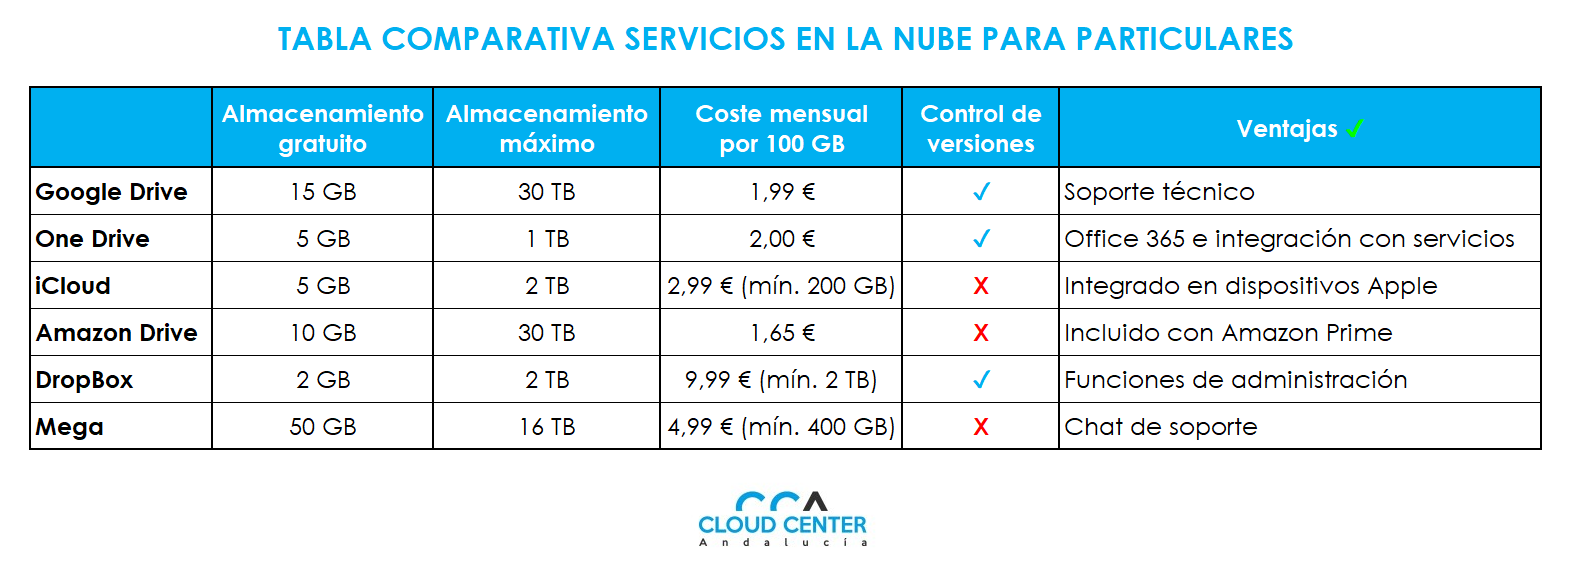 Tabla comparativa servicios nube